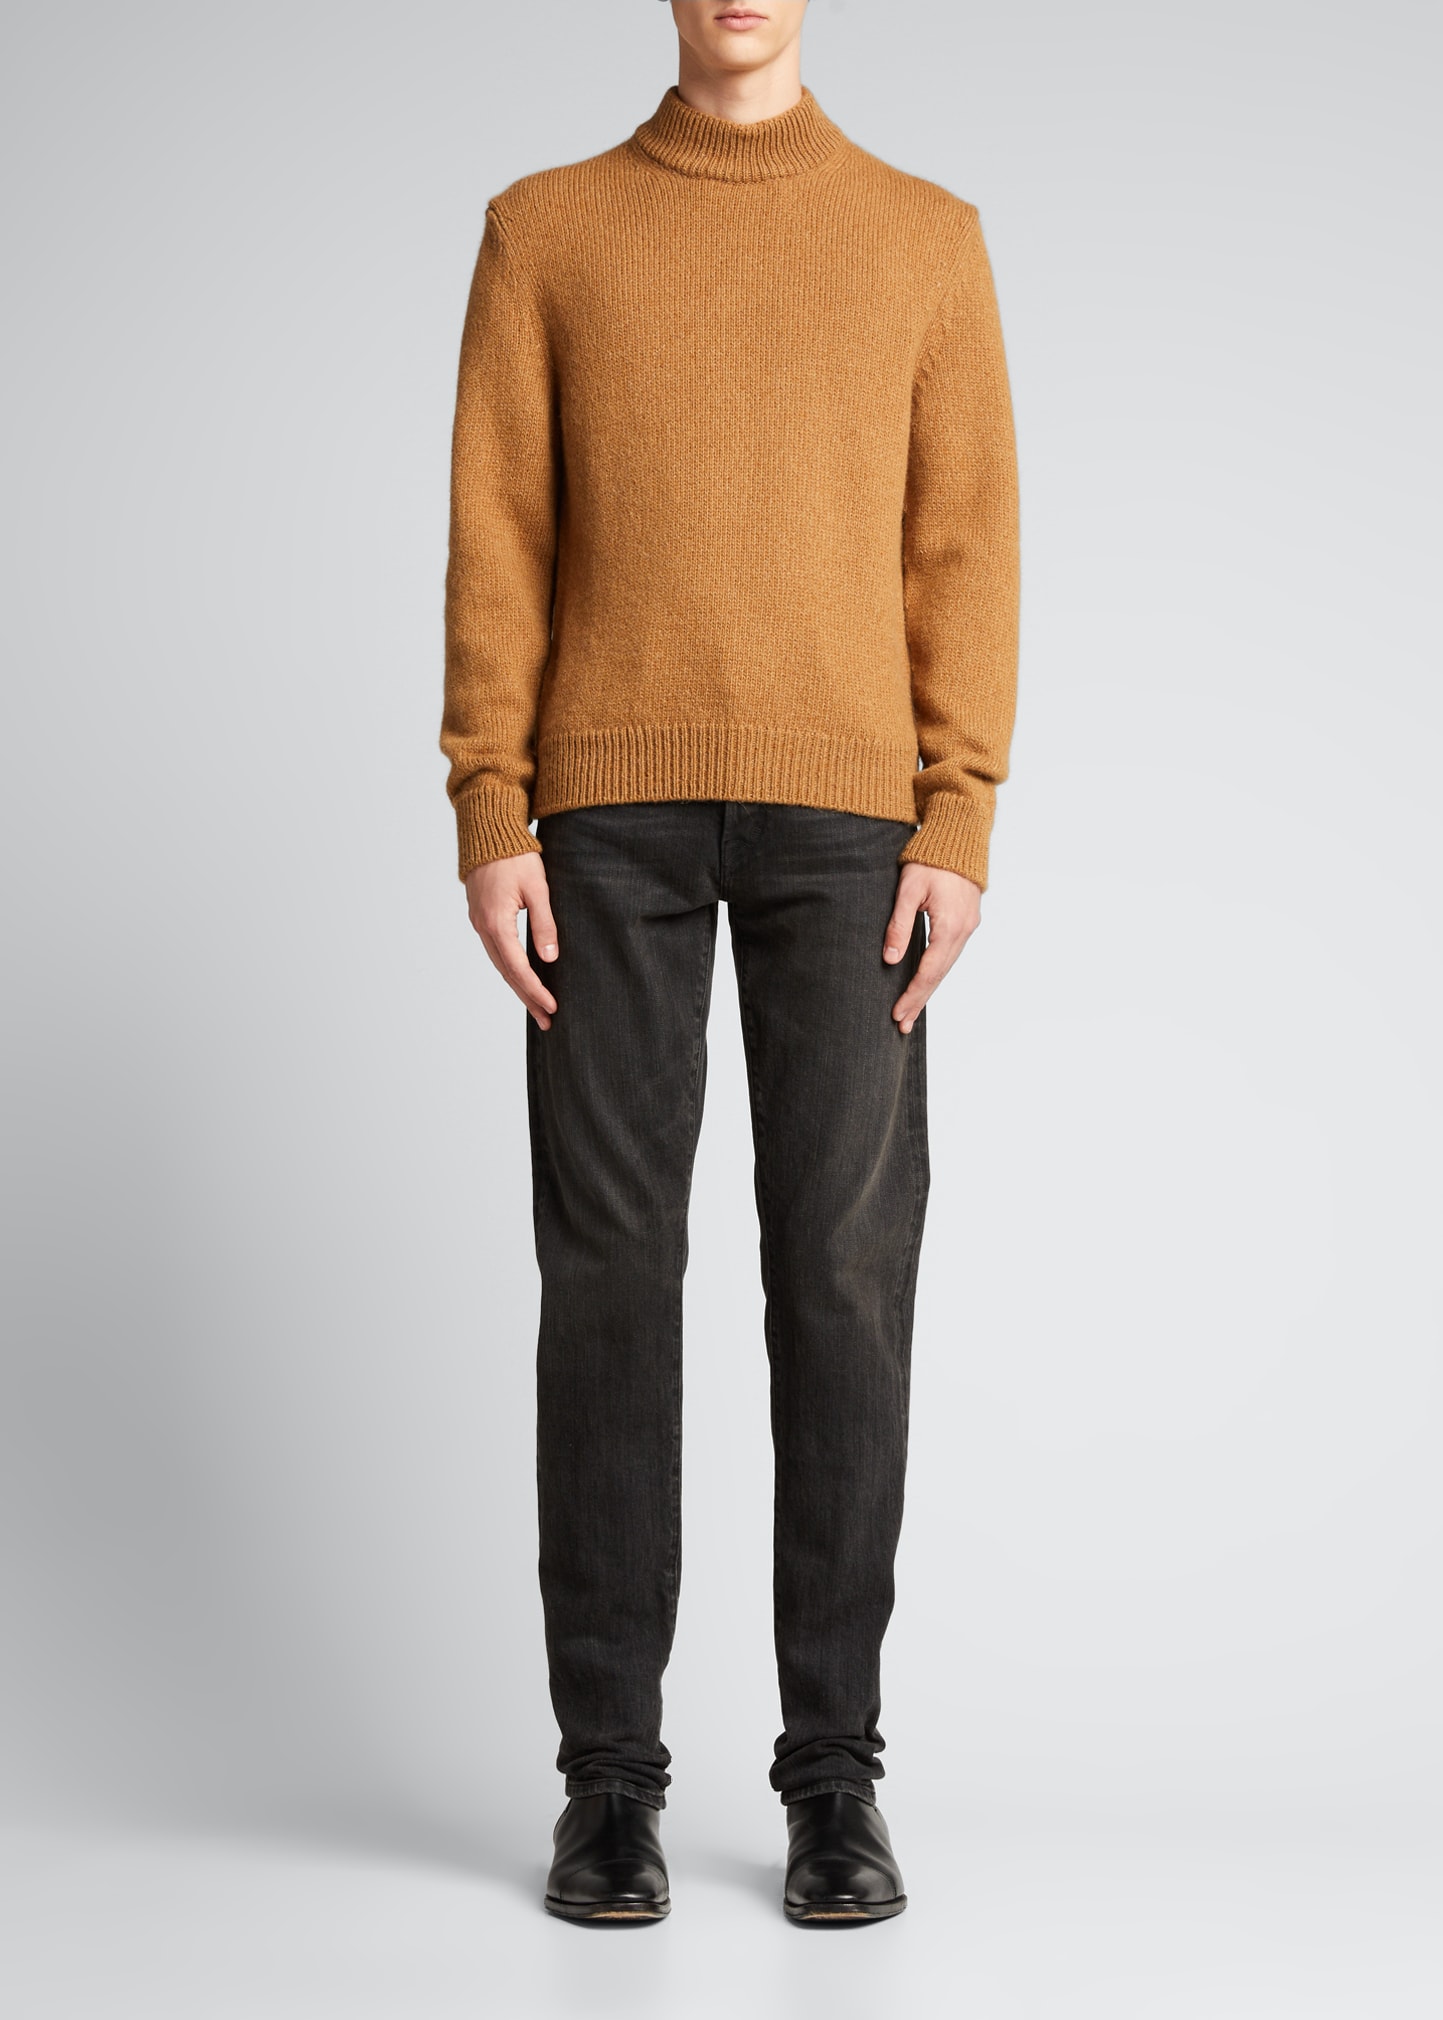 TOM FORD Men's Cashmere-Wool Turtleneck Sweater | Smart Closet